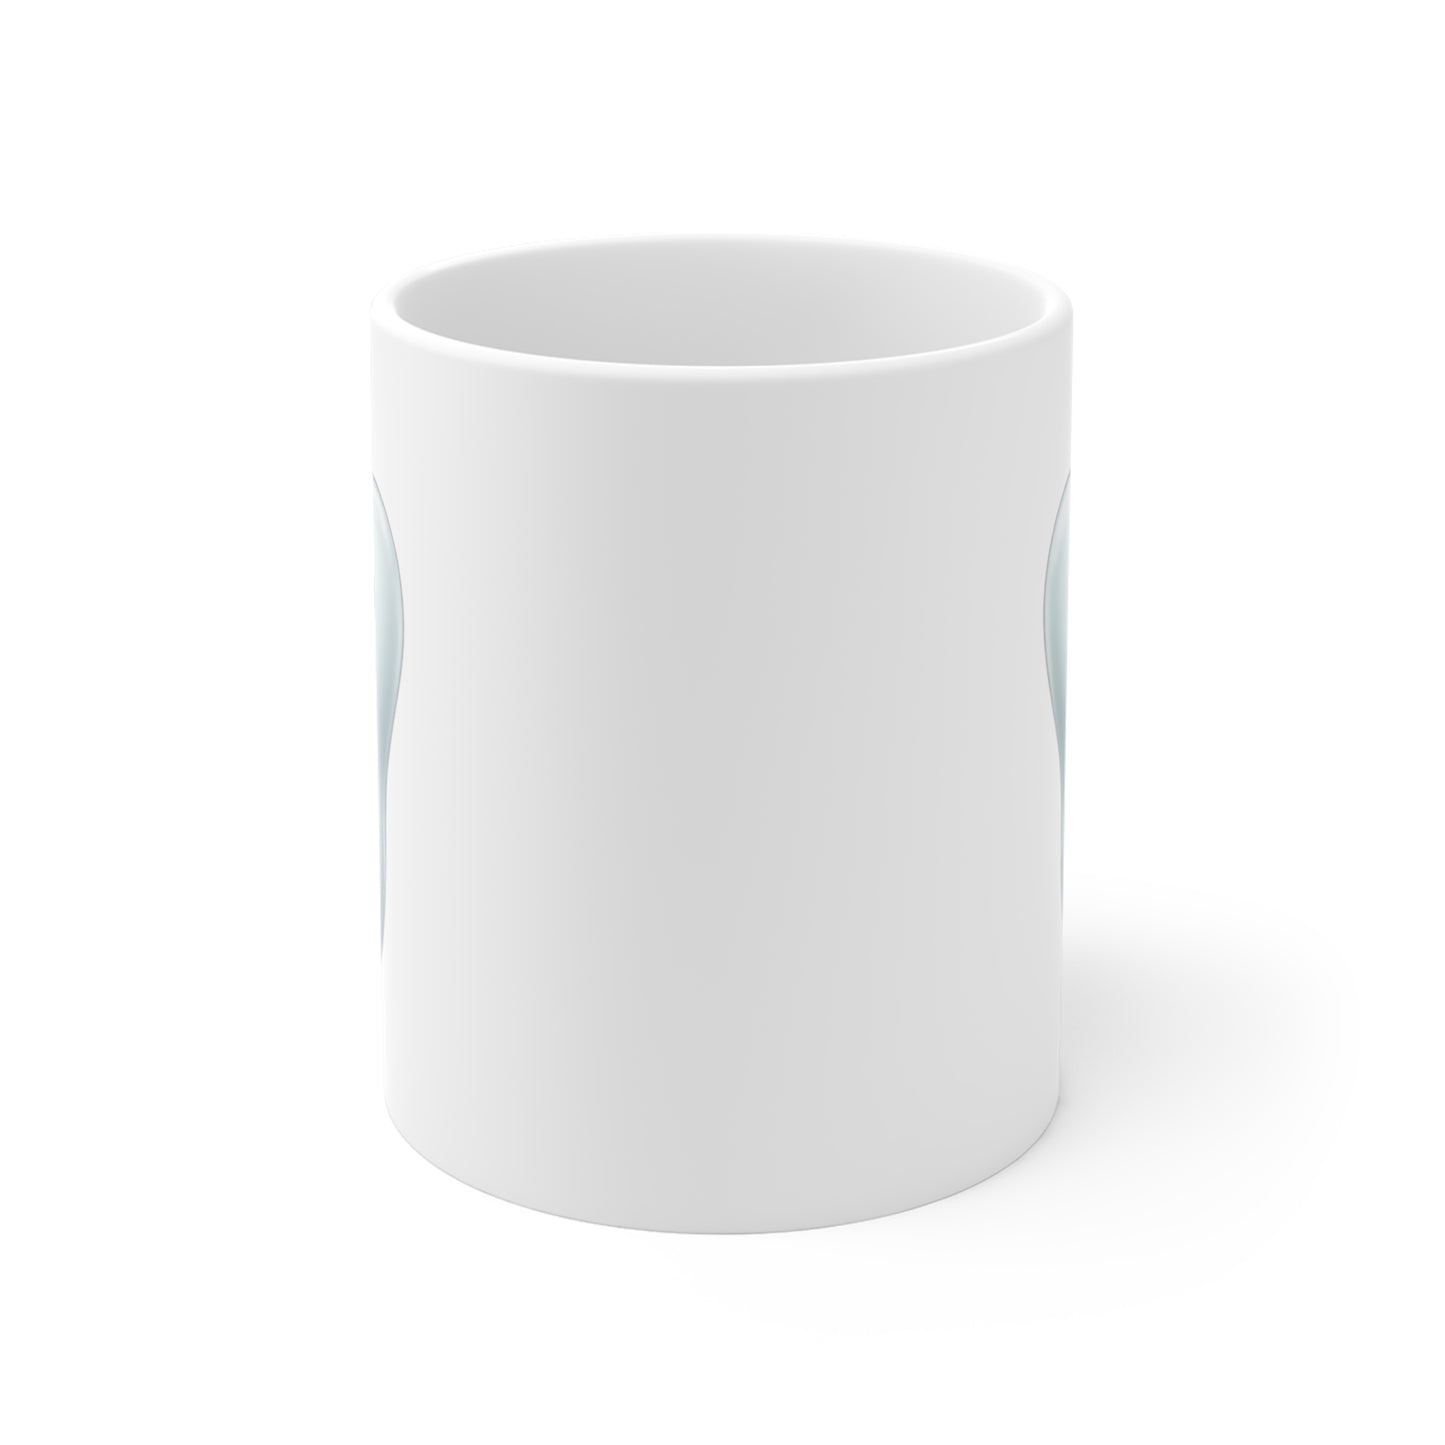 Mugz4Life (M) Tooth Design in White Ceramic Mug, 11oz